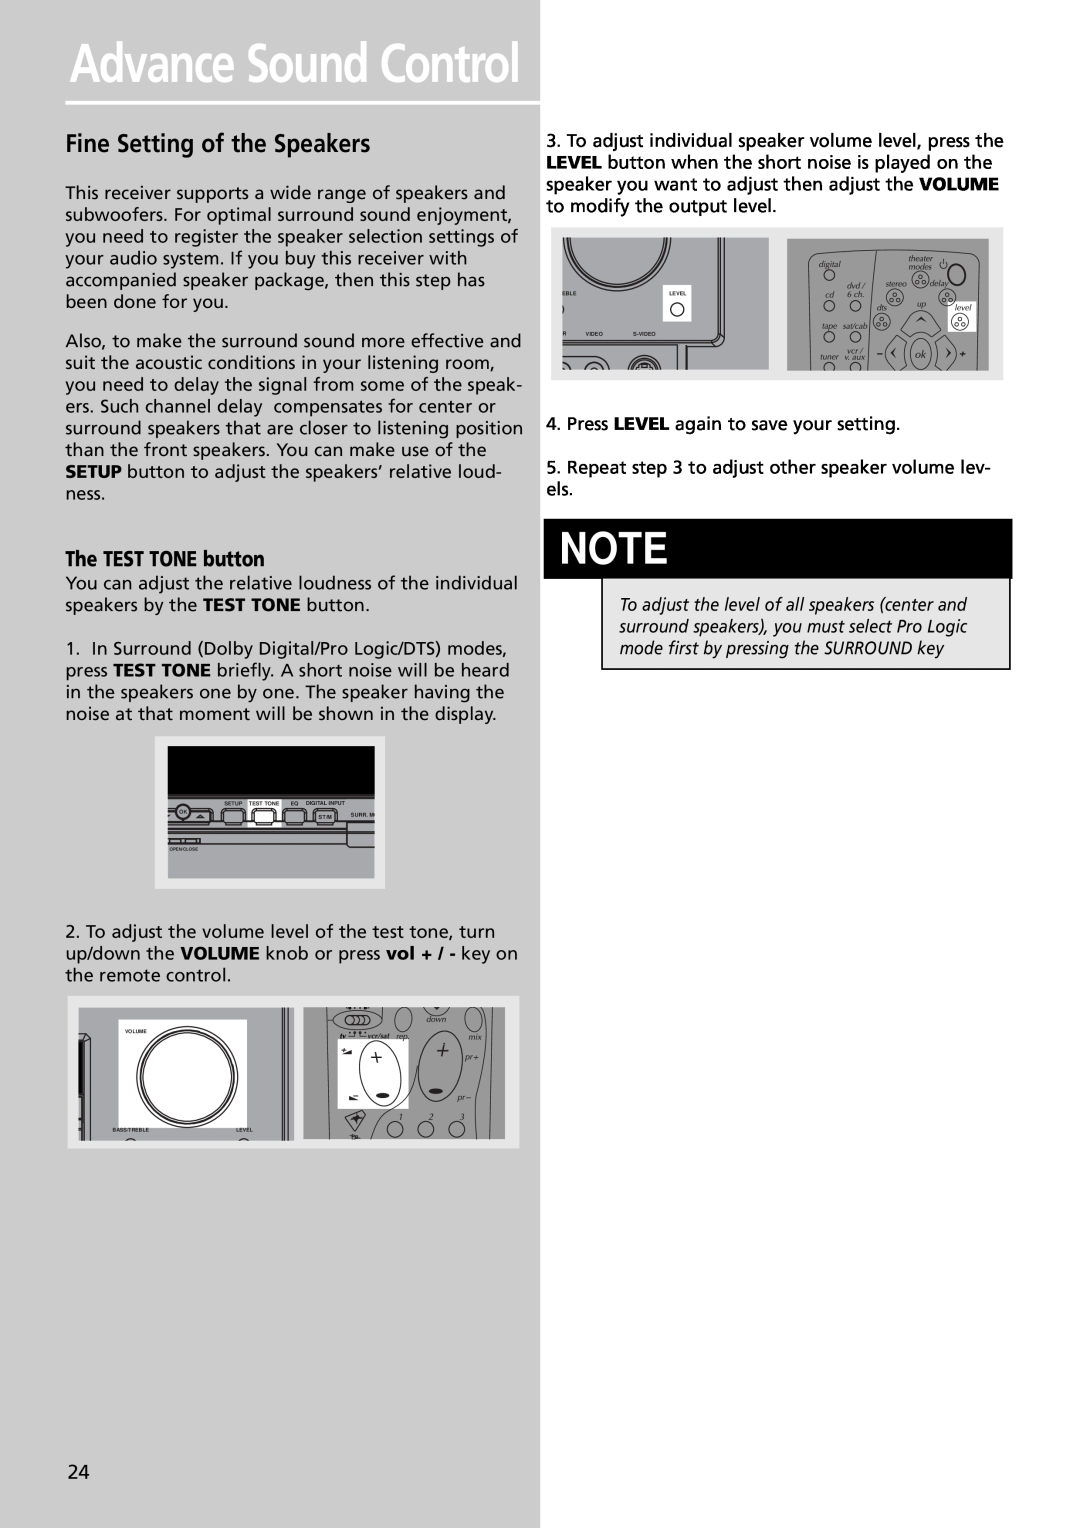 Technicolor - Thomson DPL4000 manual Advance Sound Control, Fine Setting of the Speakers, The TEST TONE button 